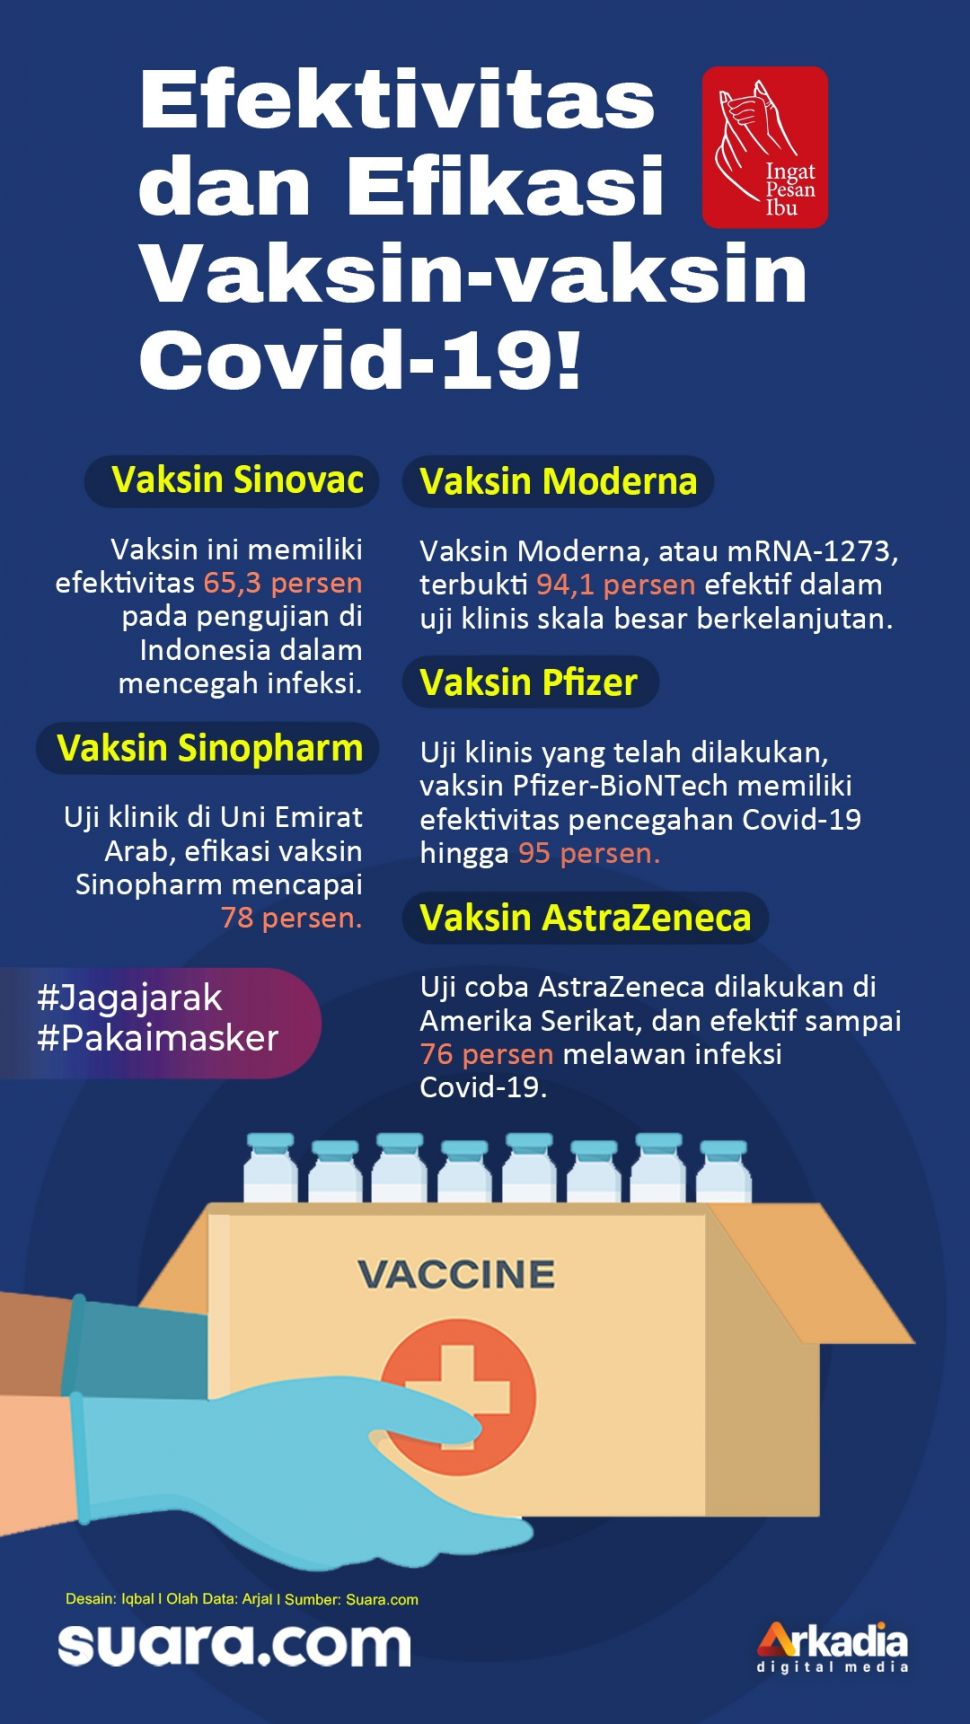 Vaksin sinopharm dari mana